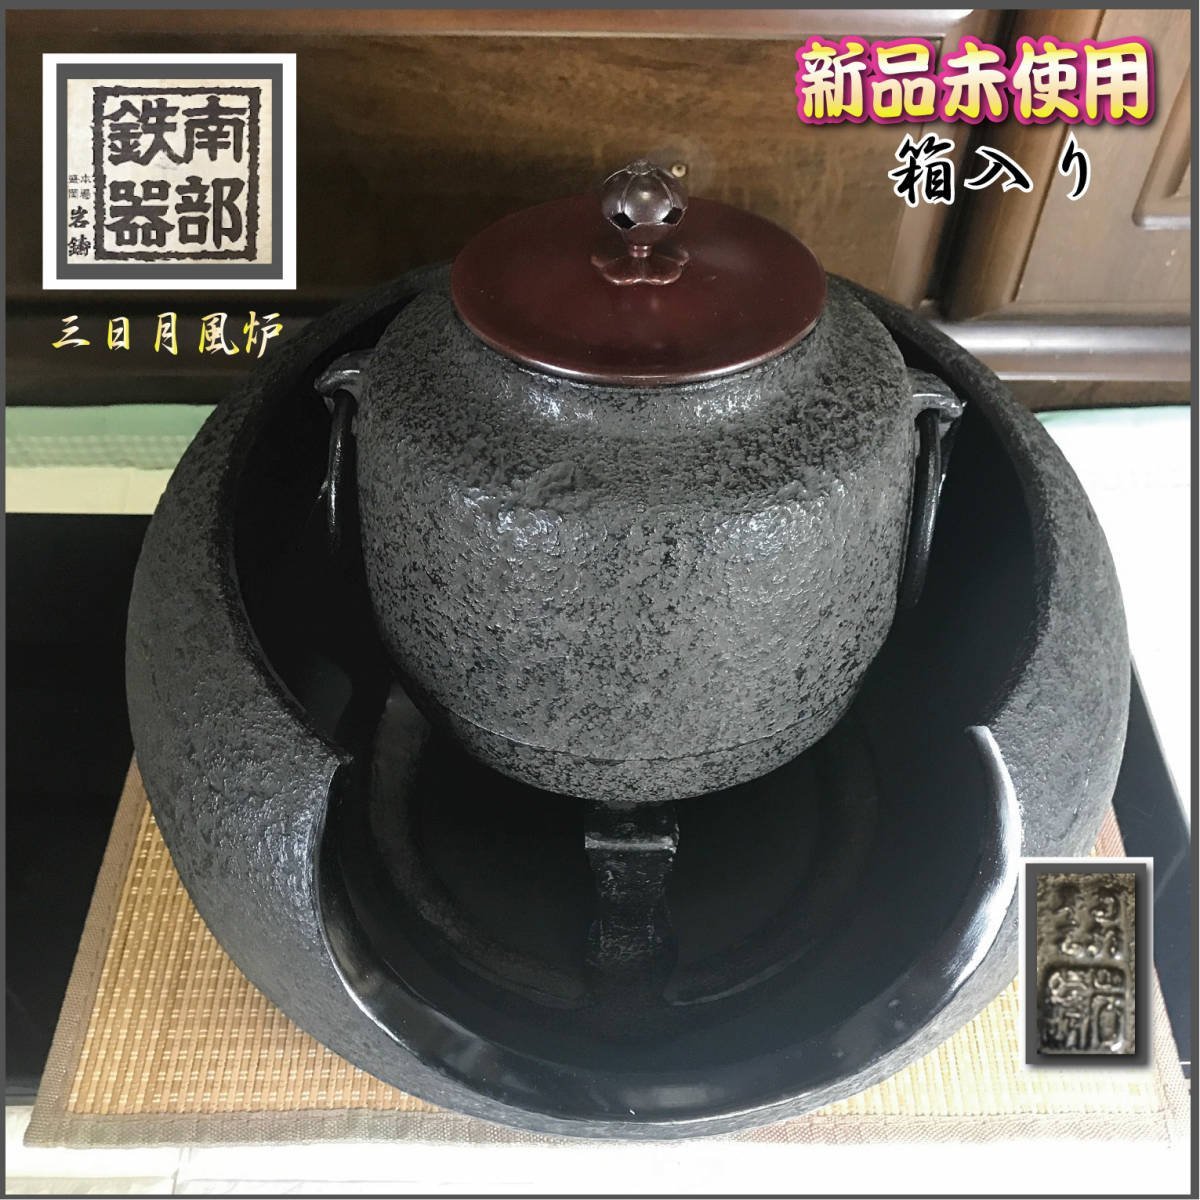 Yahoo!オークション - 南部鉄器 岩鋳 茶の湯釜セット 鉄瓶 蓋付湯釜